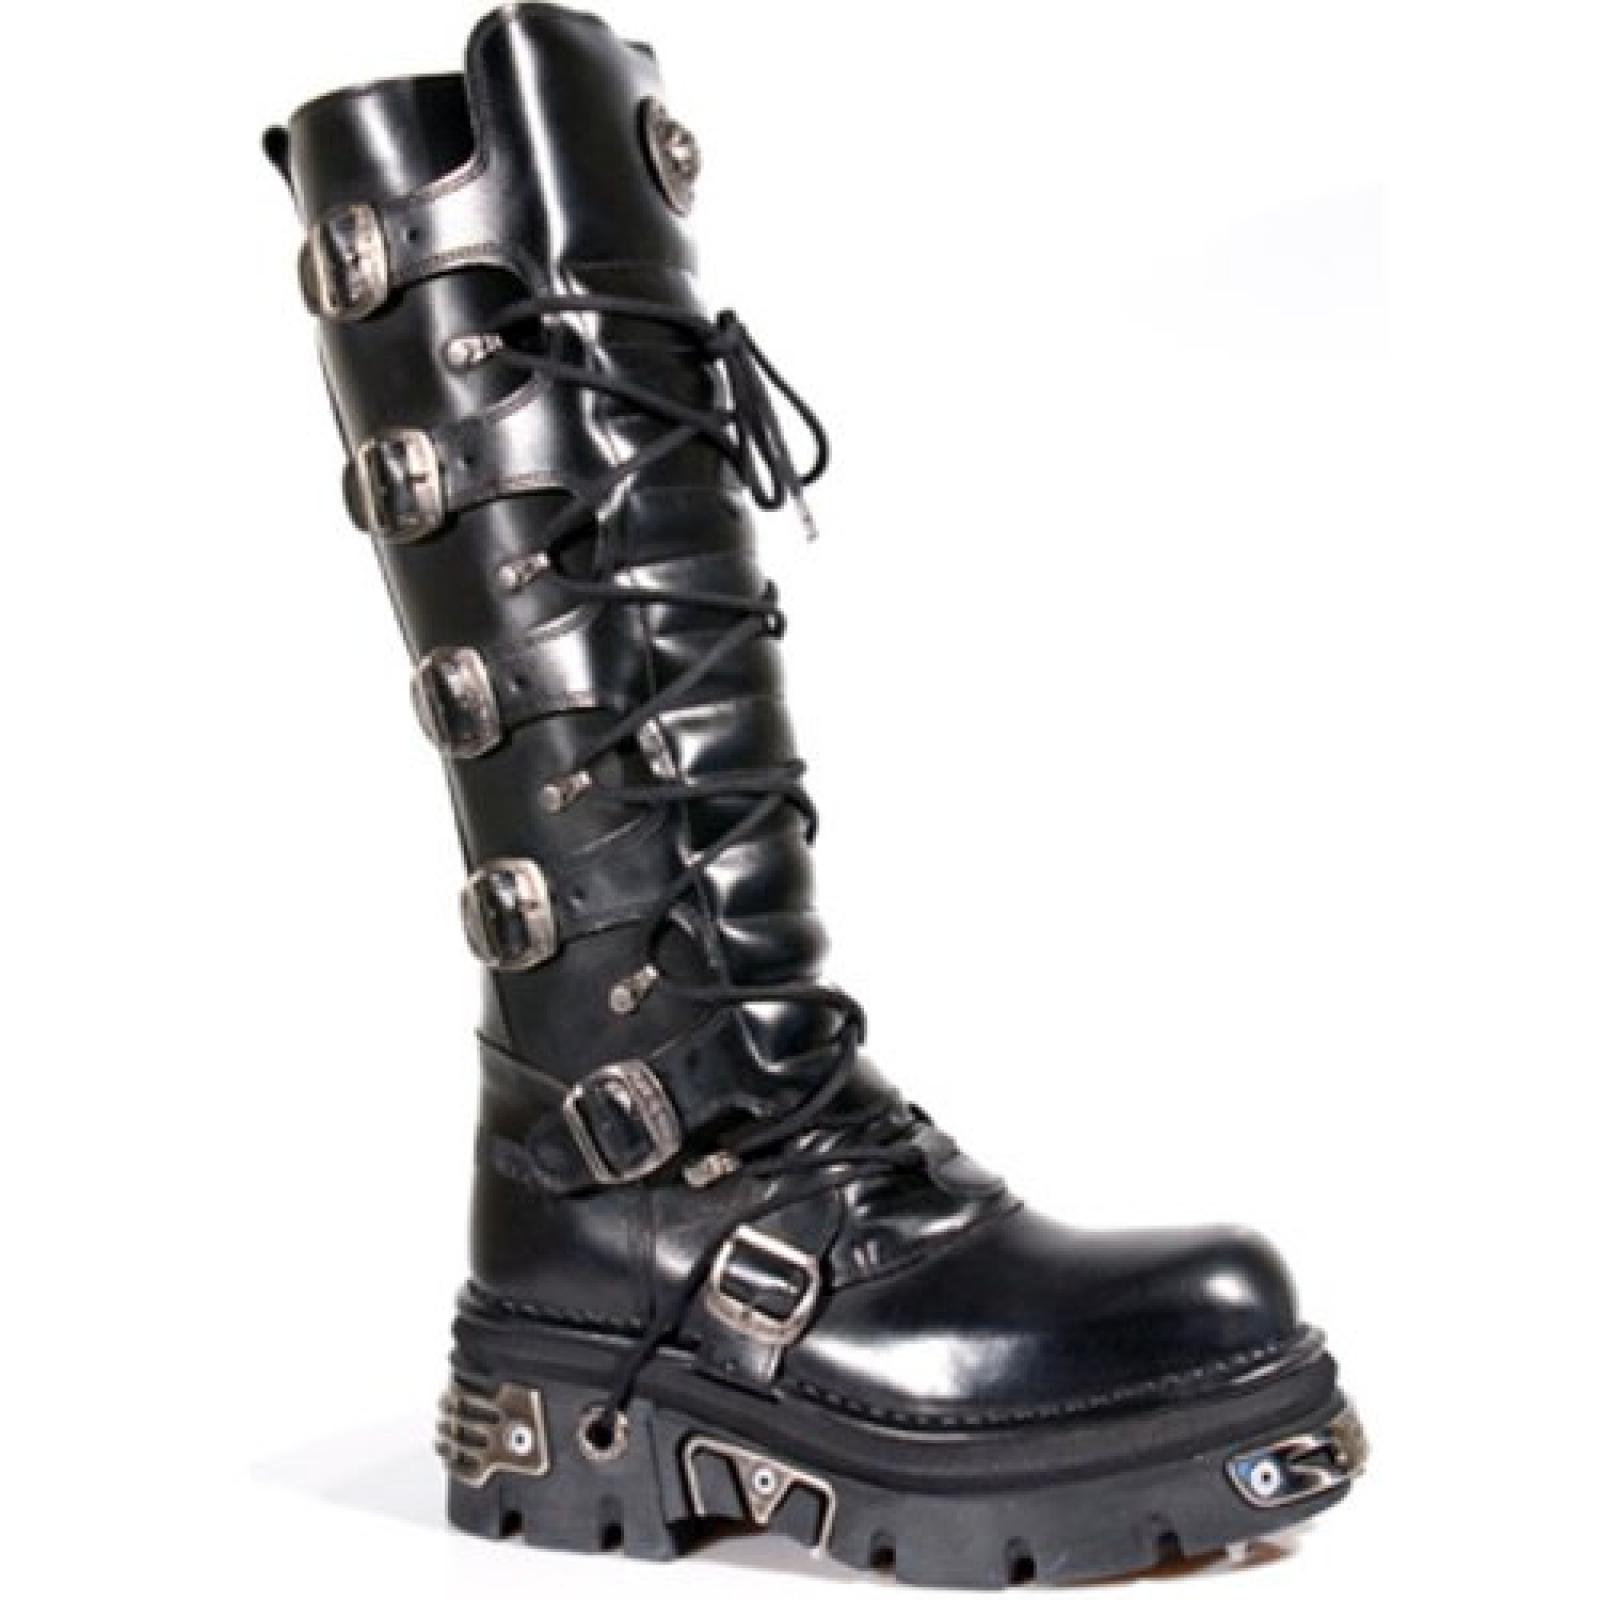 New Rock Boots Unisex Stiefel - Style 272 S1 schwarz 